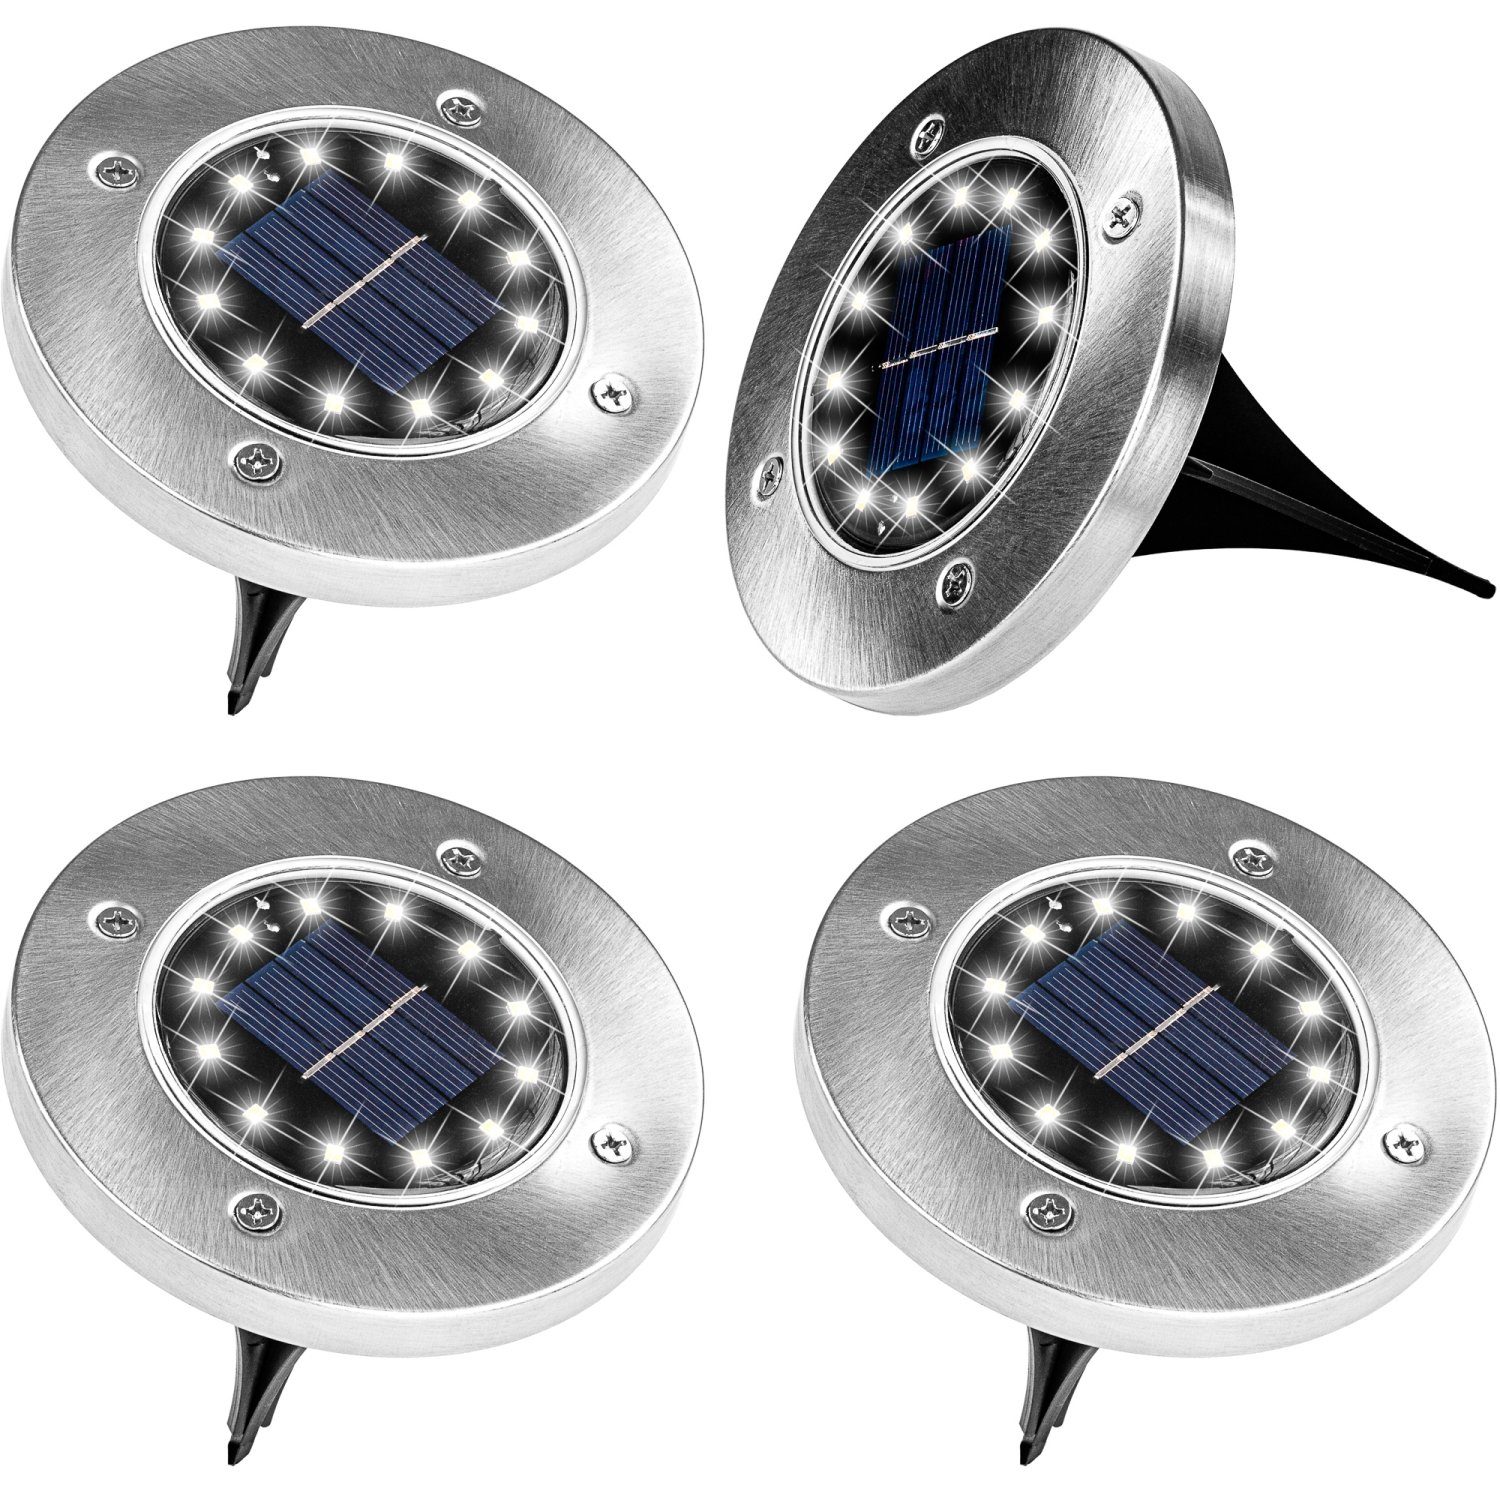 VOLTRONIC LED Solarleuchte »Solar Bodenleuchte Wegeleuchte Gartenleuchte«,  Lichtsensor, Solarmodul, LED fest integriert, Kaltweiß, 8 LEDs, kaltweiß  beleuchtet, Edelstahl-Look, abnehmbarer Erdspieß, 4er oder 8er Set